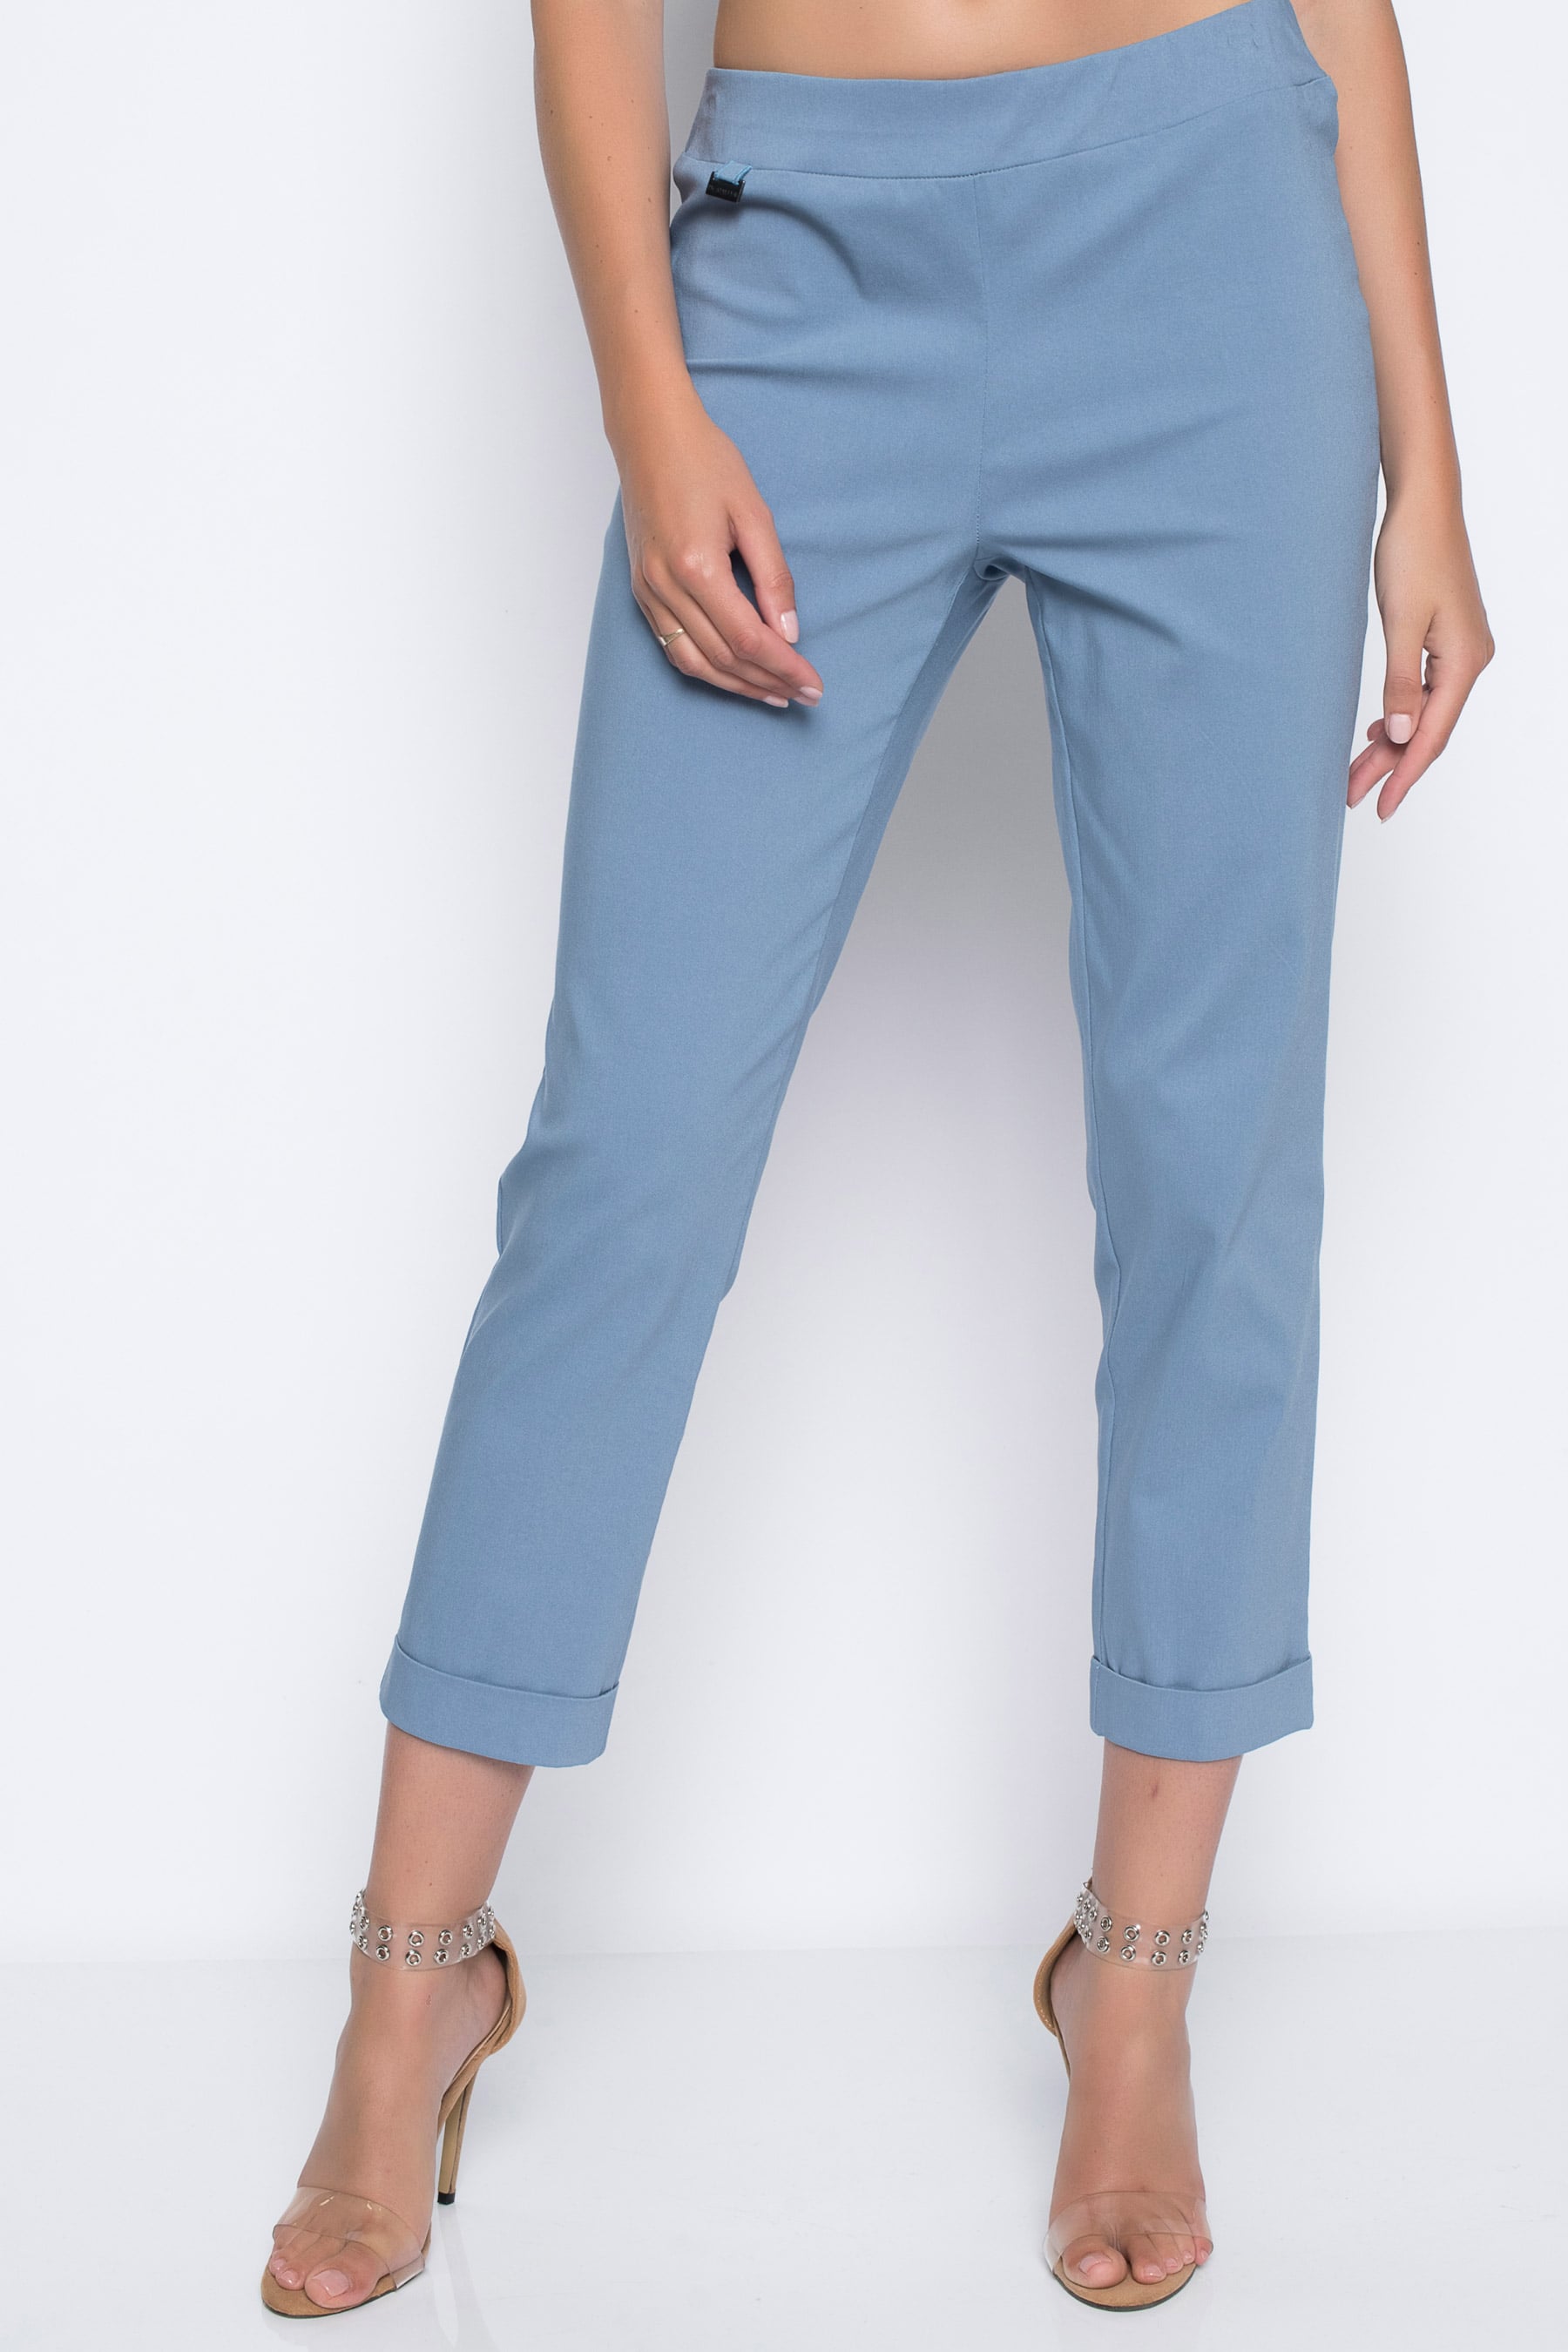 Gap Women's Blue Ankle Pants / Size 8 – CanadaWide Liquidations